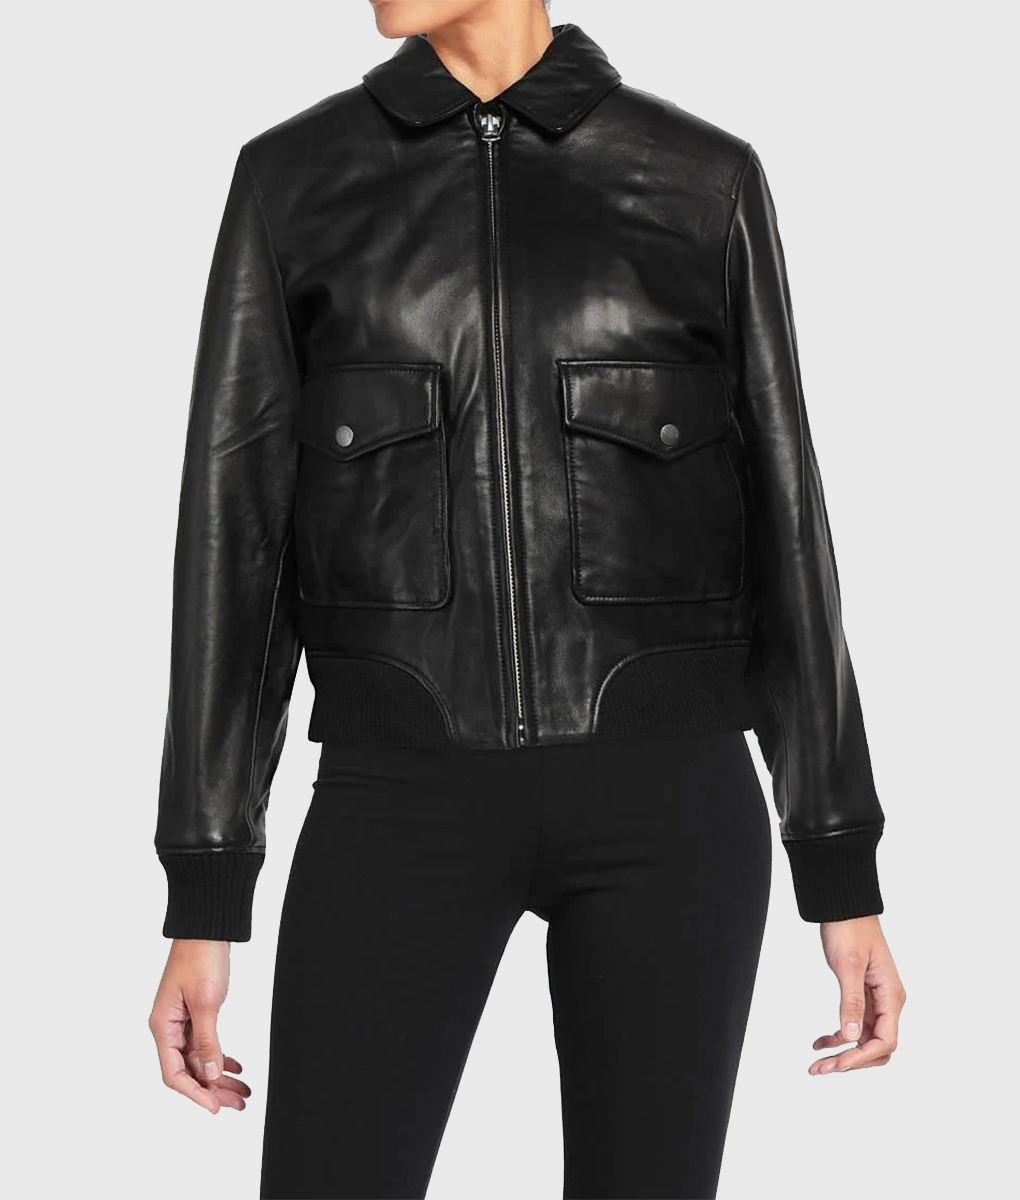 Jennifer Connelly Dark Matter Leather Jacket (5)